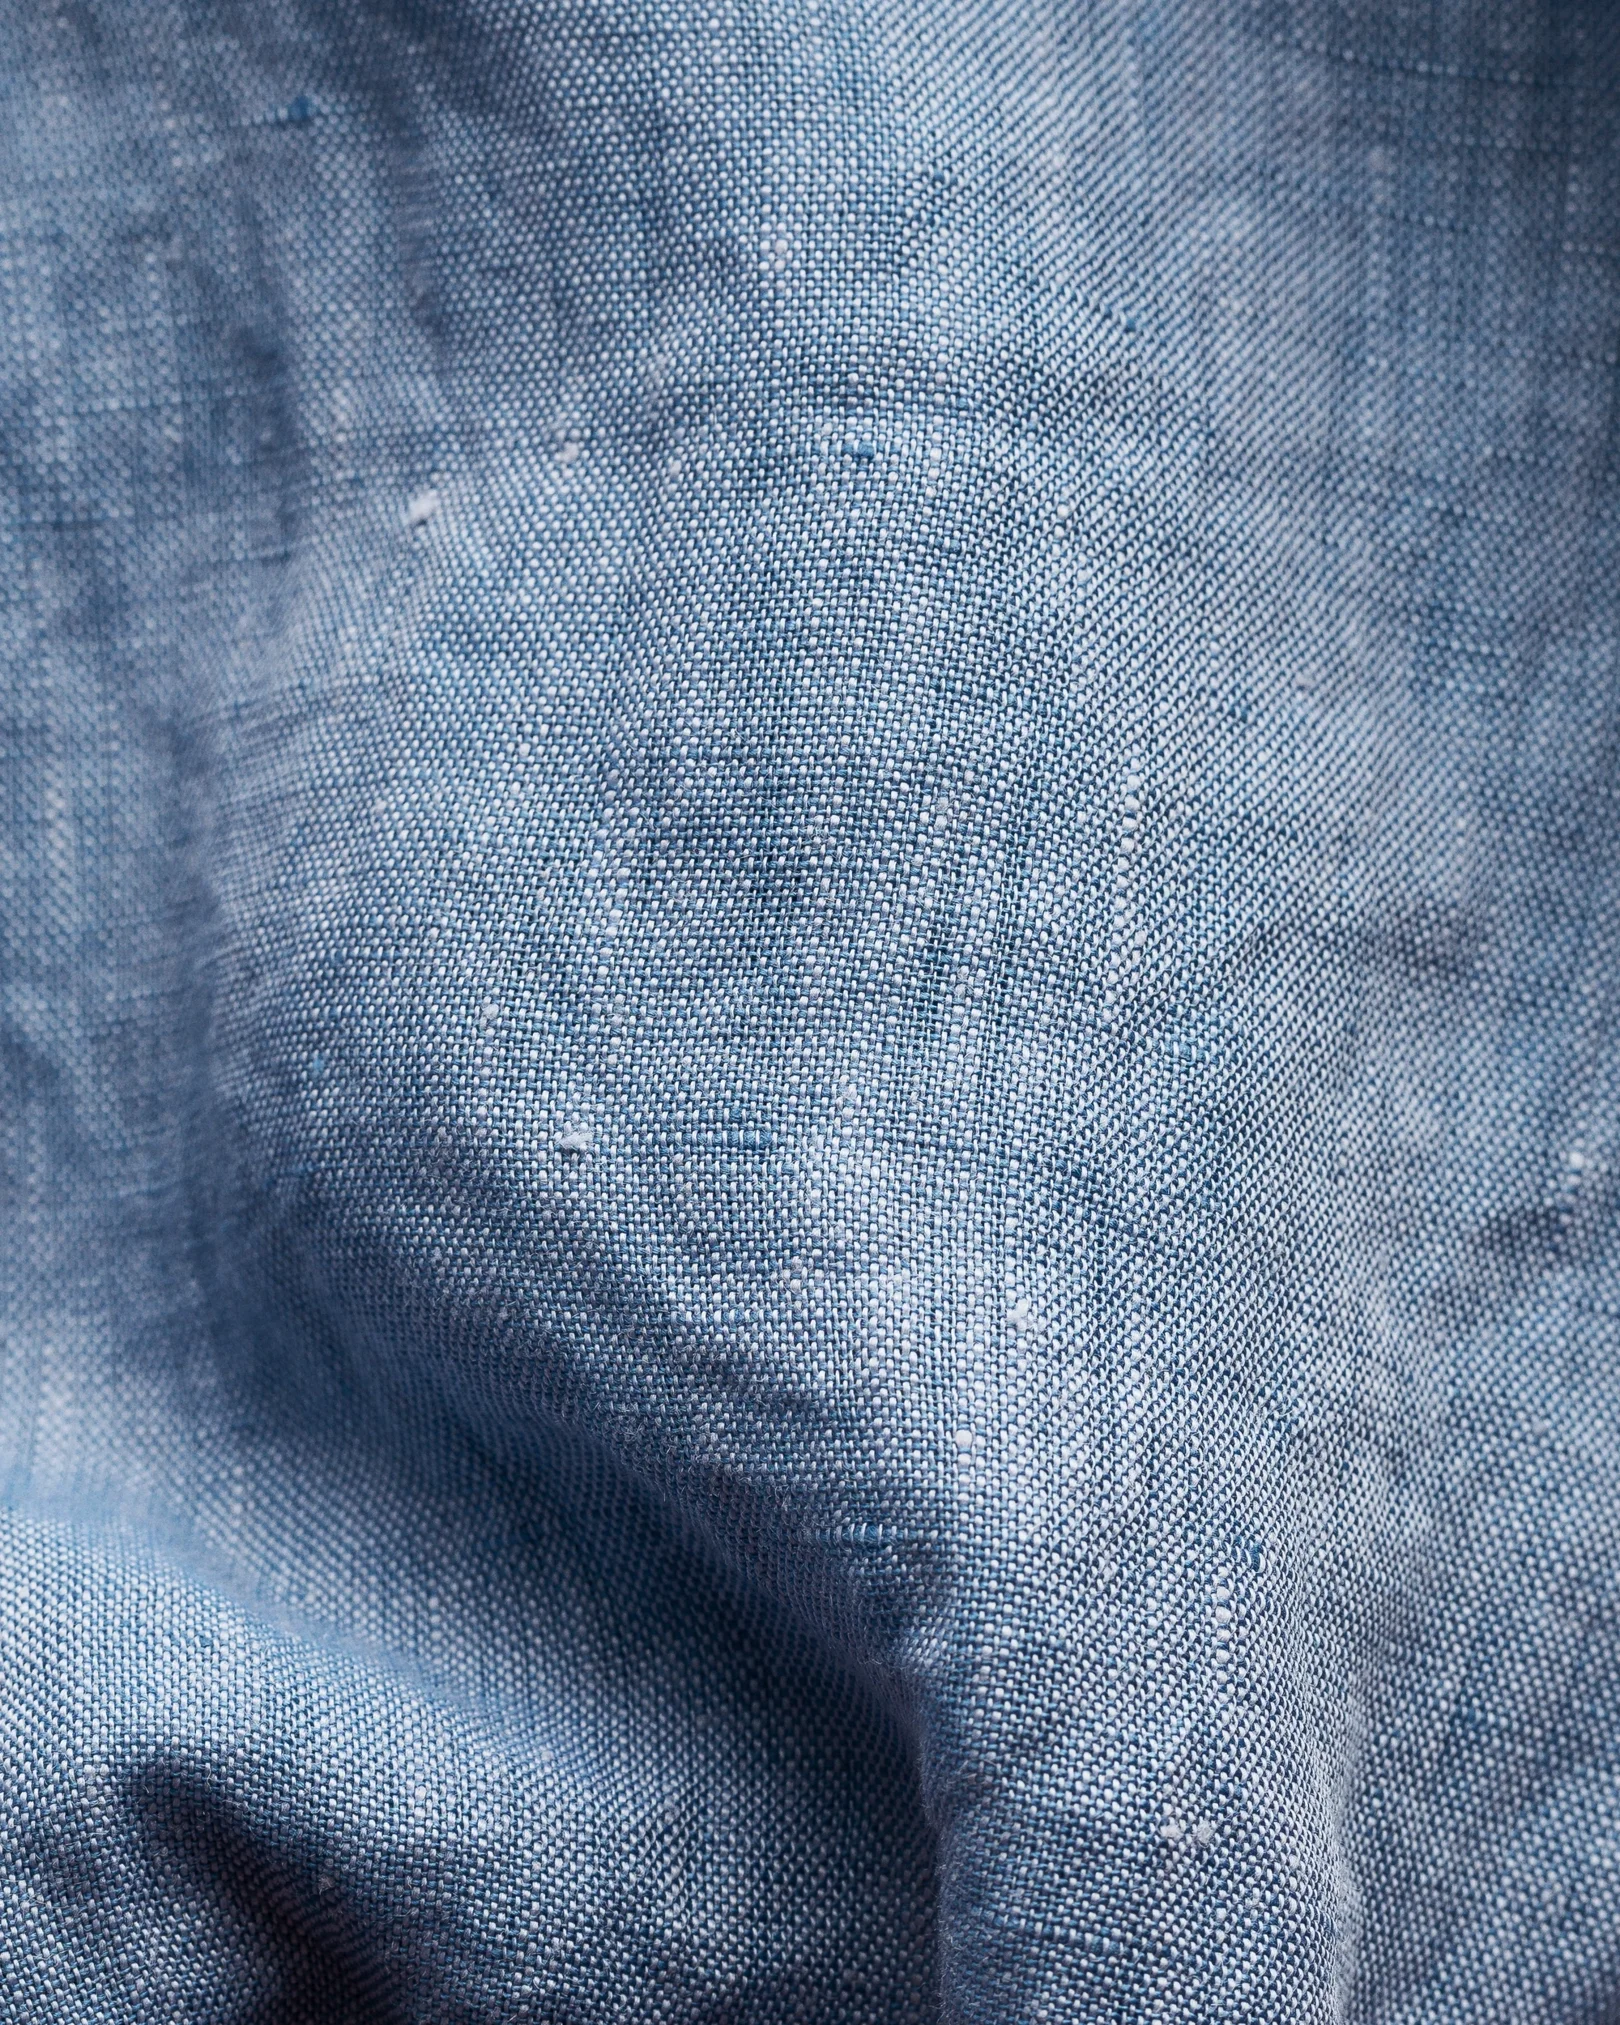 Eton - blue linen shirt short sleeve